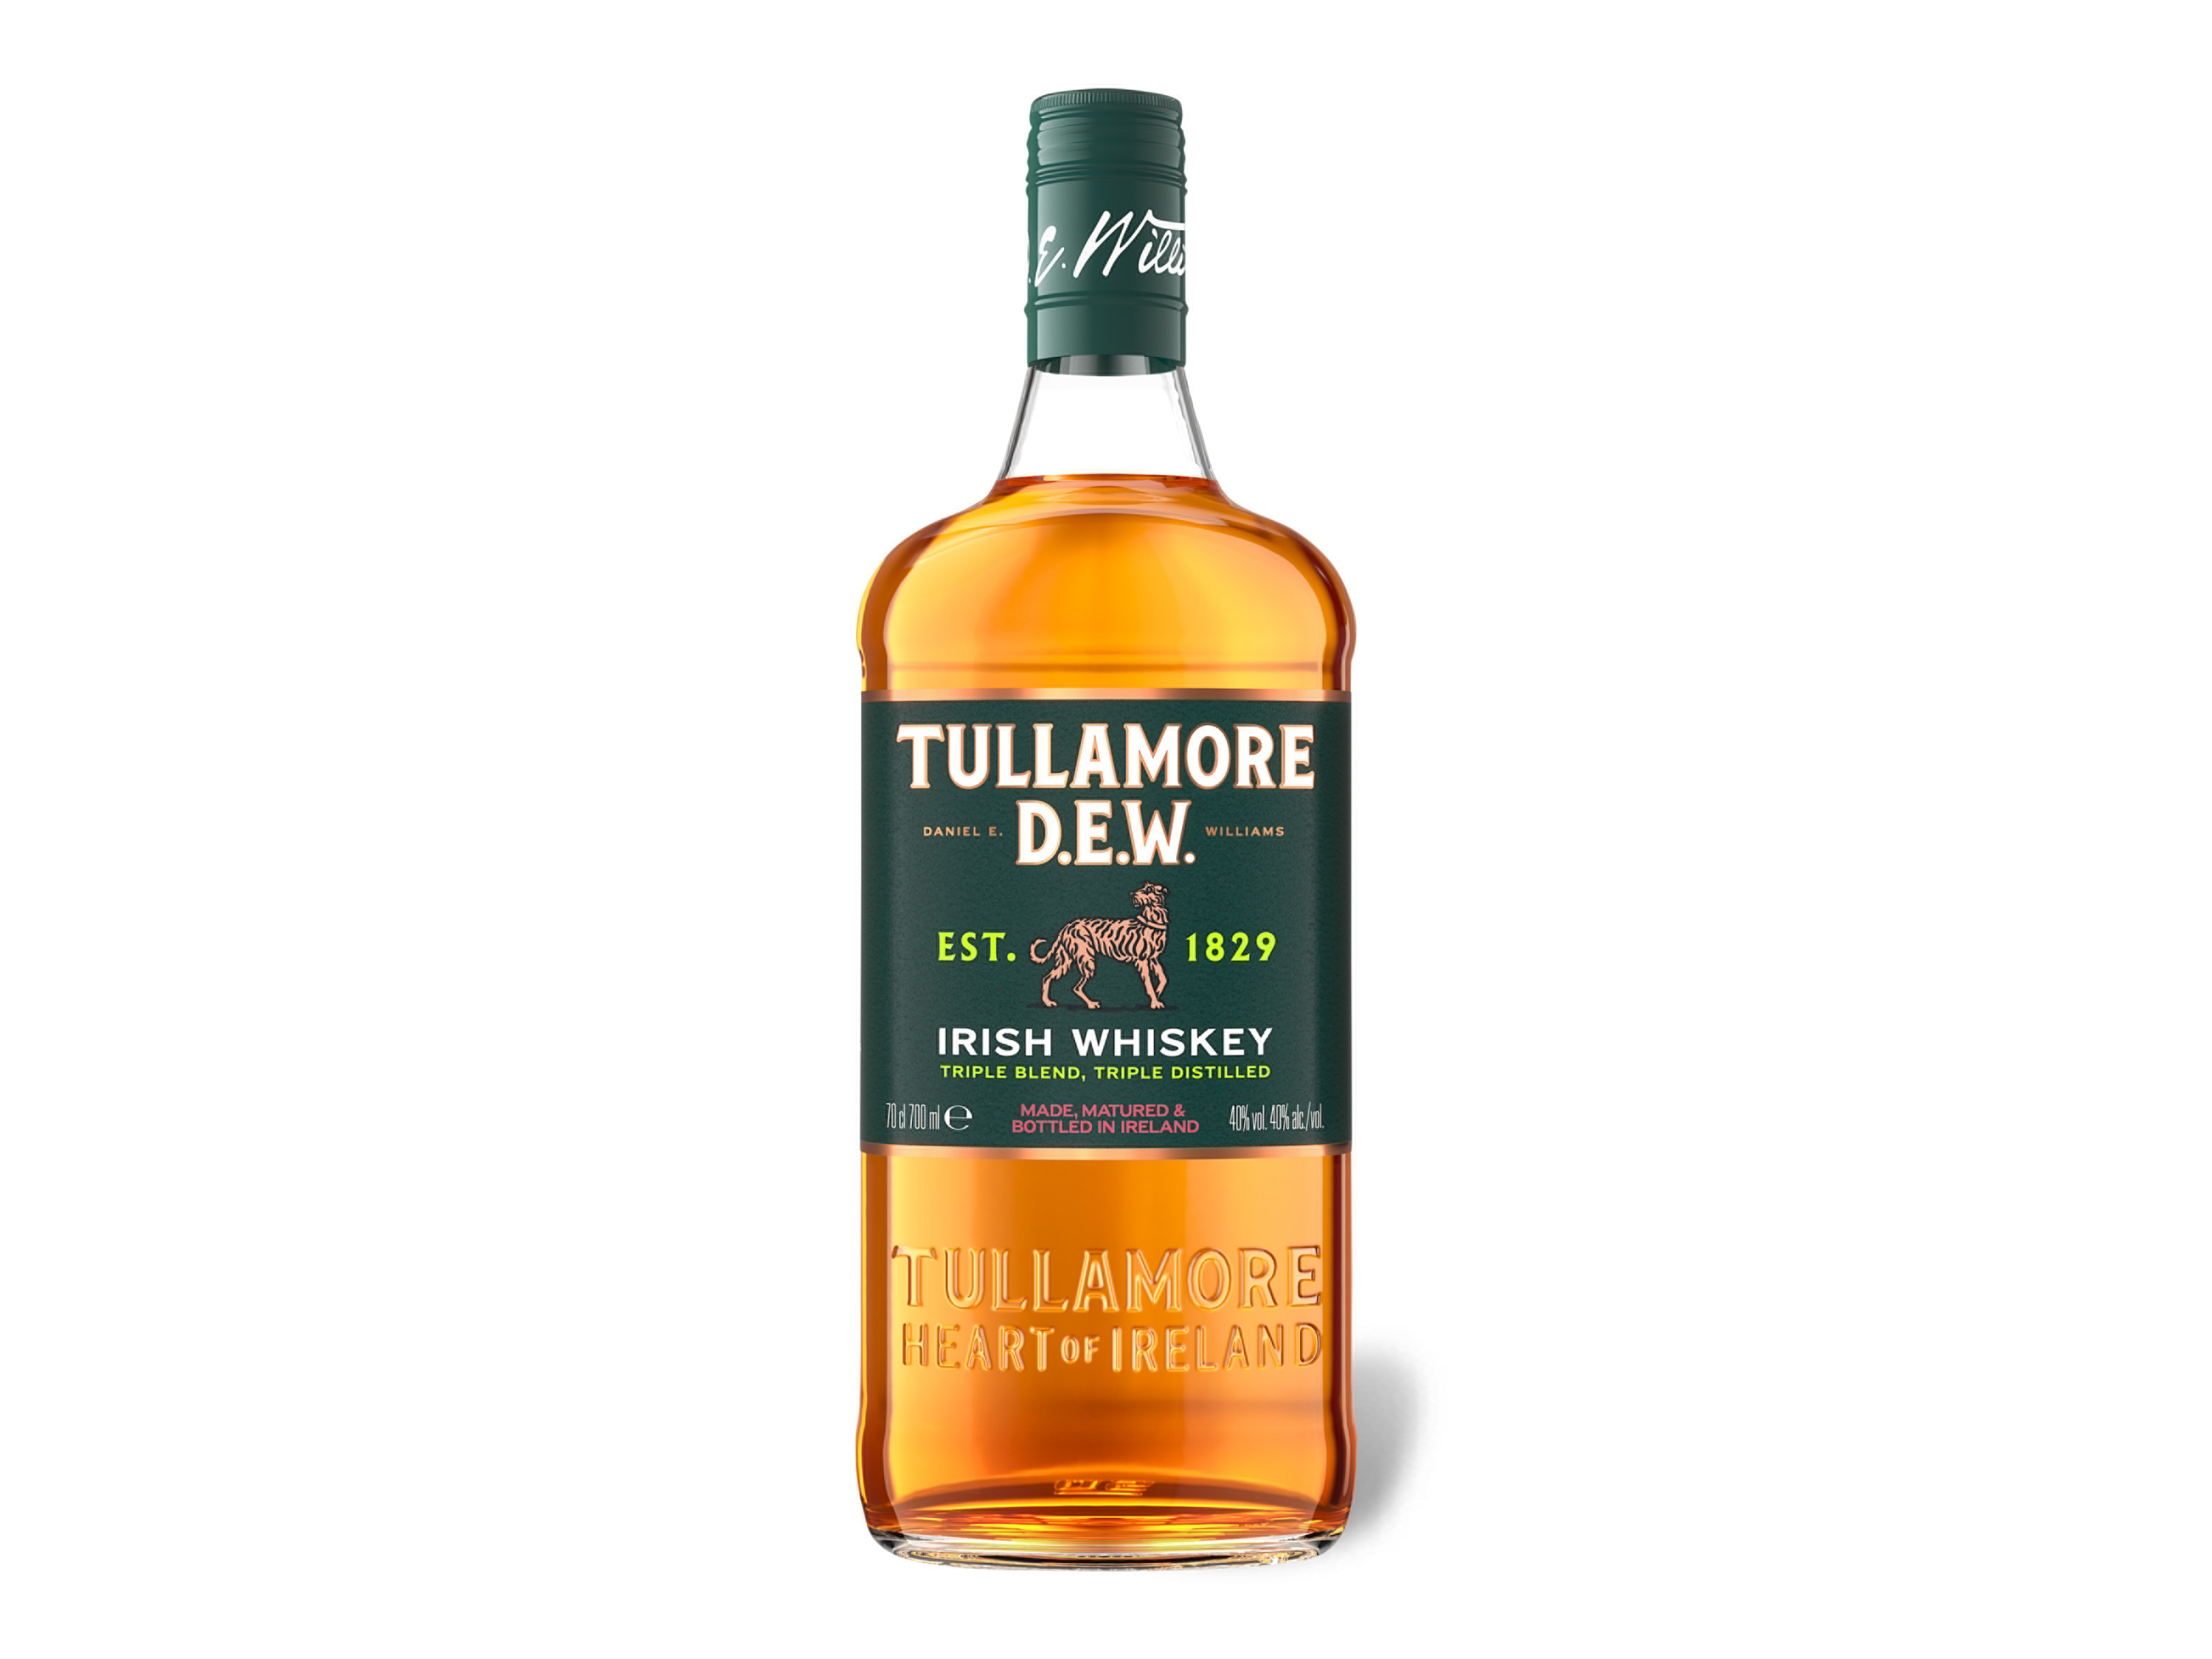 Tullamore Dew Irish Whiskey Triple Distilled 40% Vol